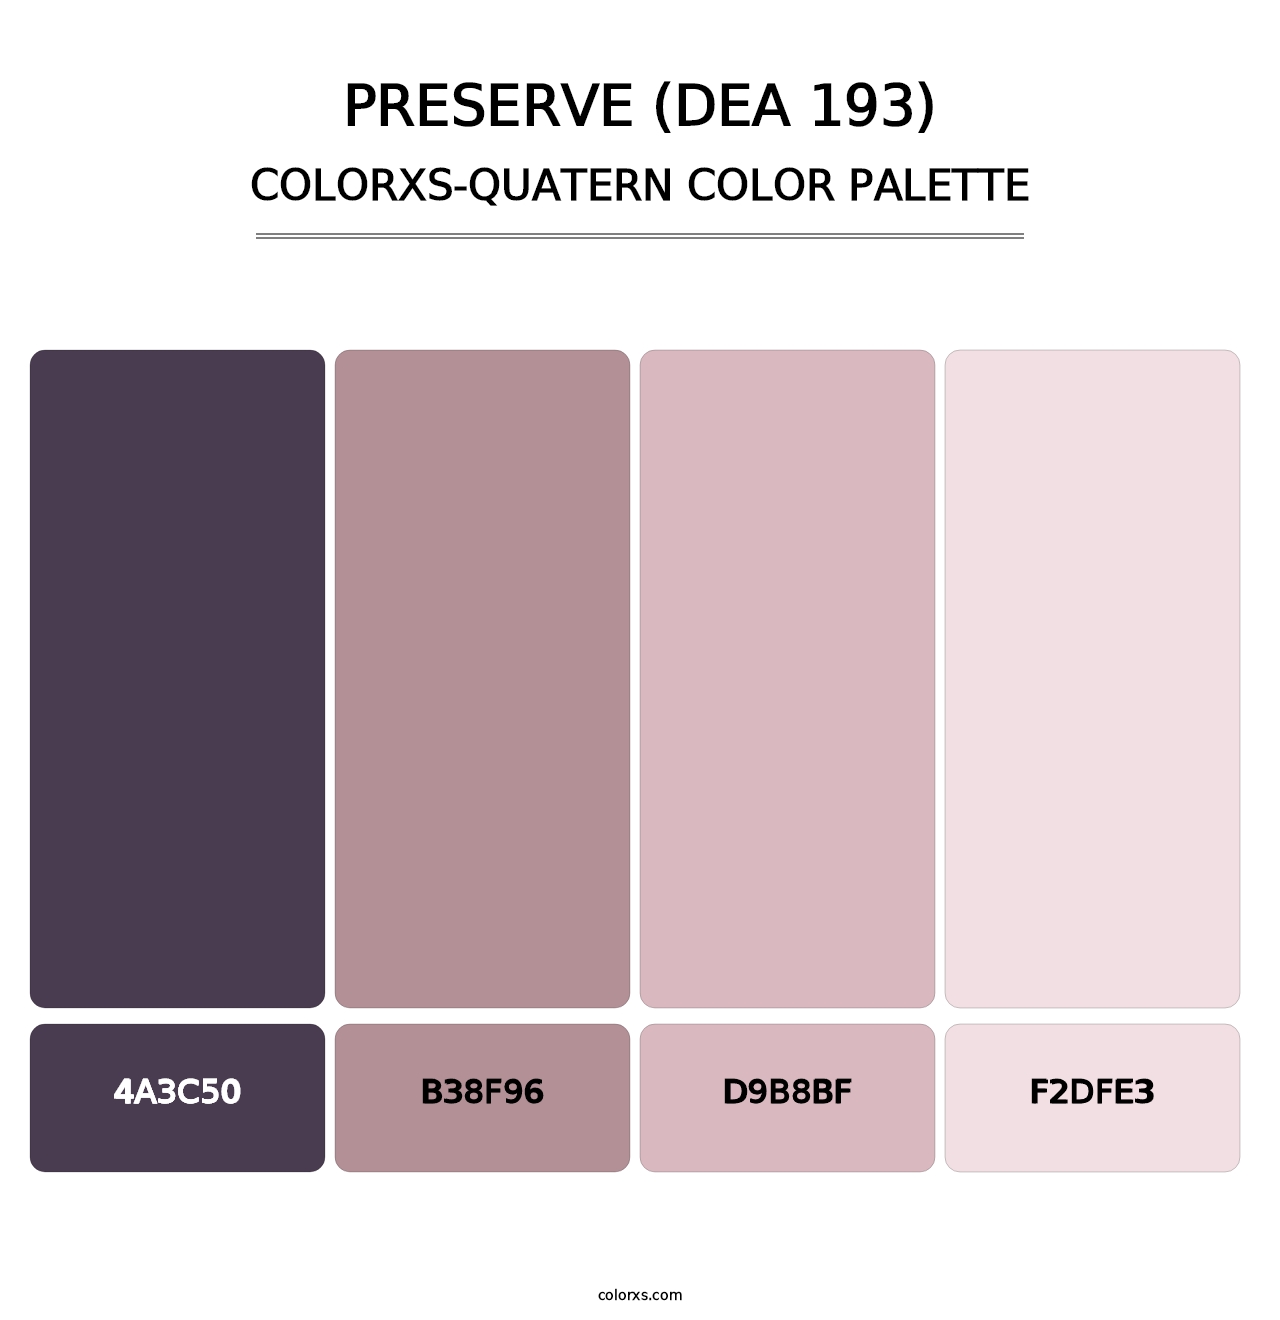 Preserve (DEA 193) - Colorxs Quatern Palette